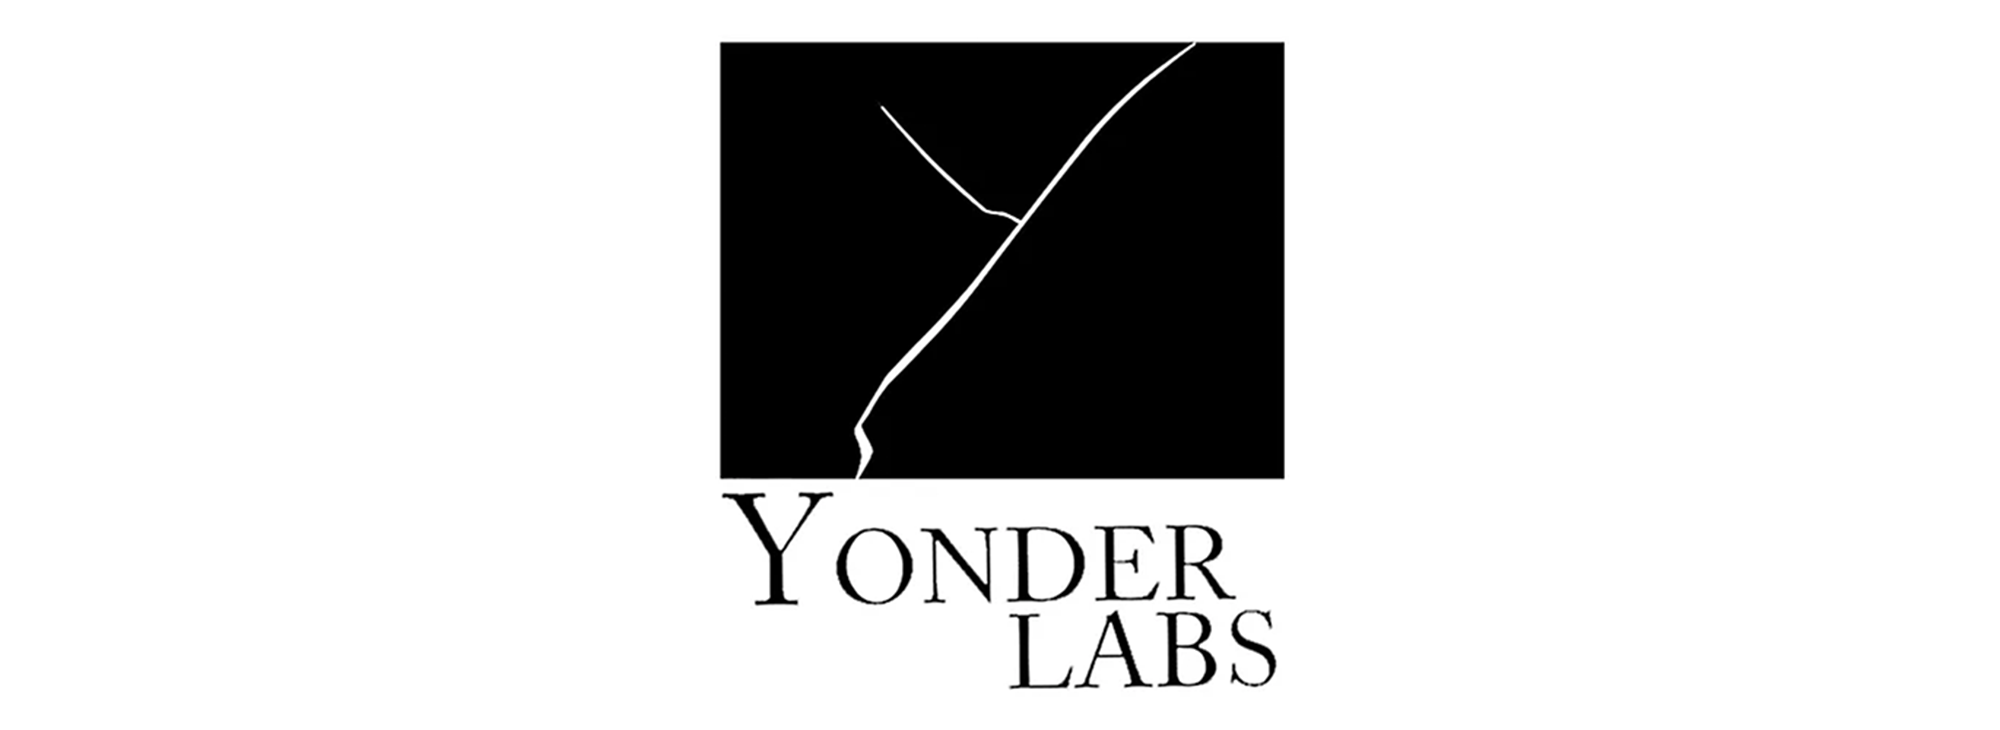 Yonder_Labs